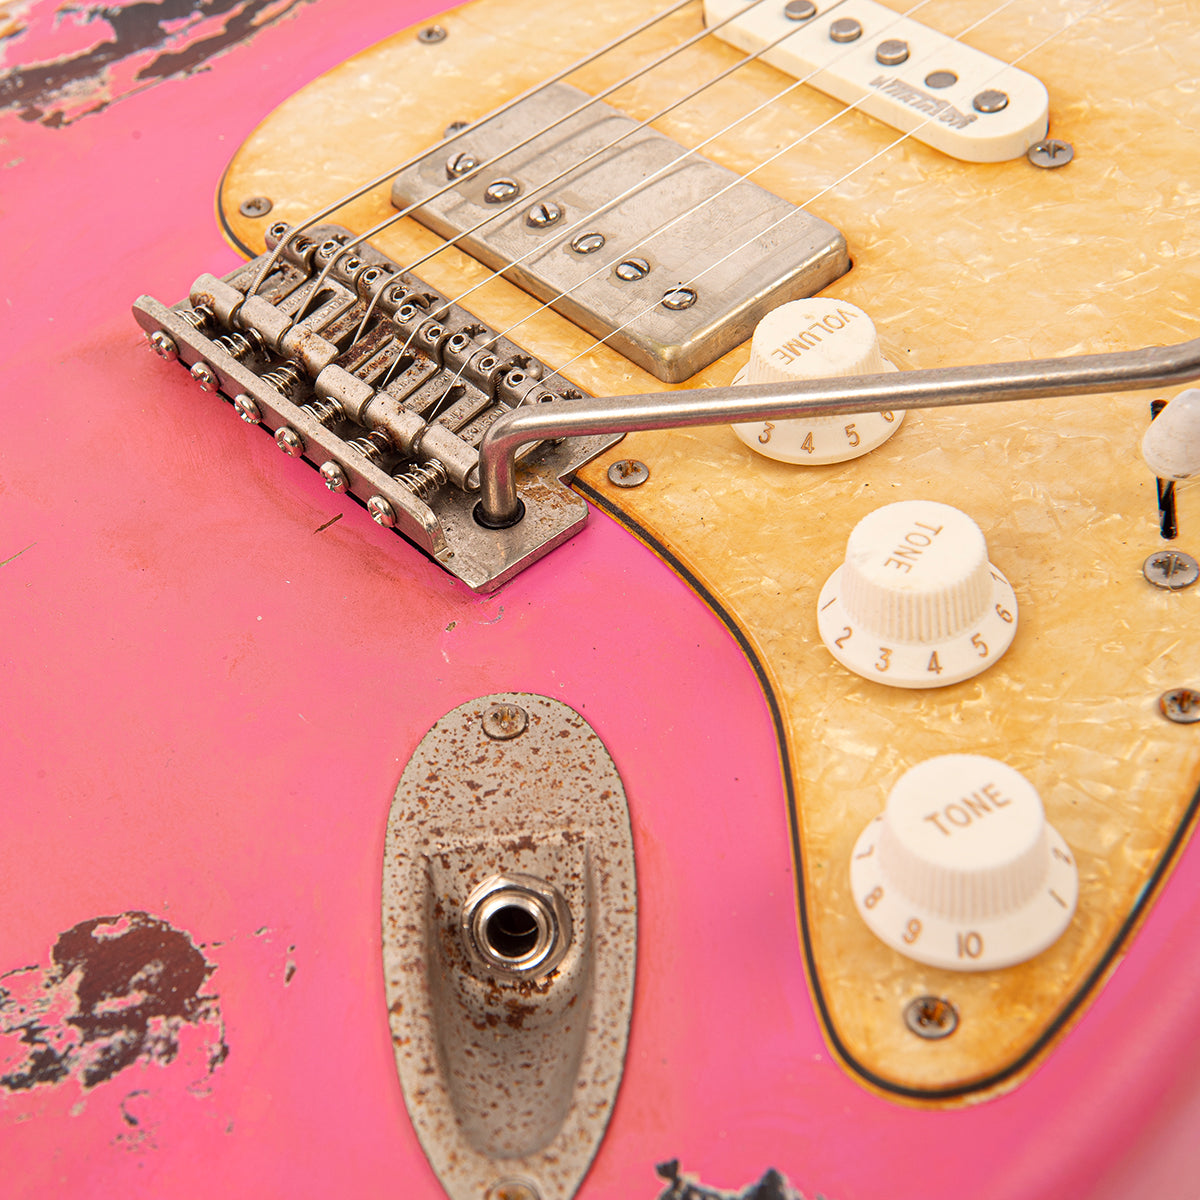 SOLD - Vintage V6 ProShop Custom-Build ~ Radioactive Bubblegum Pink (Contact: Richards Guitars. www.rguitars.co.uk), Electrics for sale at Richards Guitars.